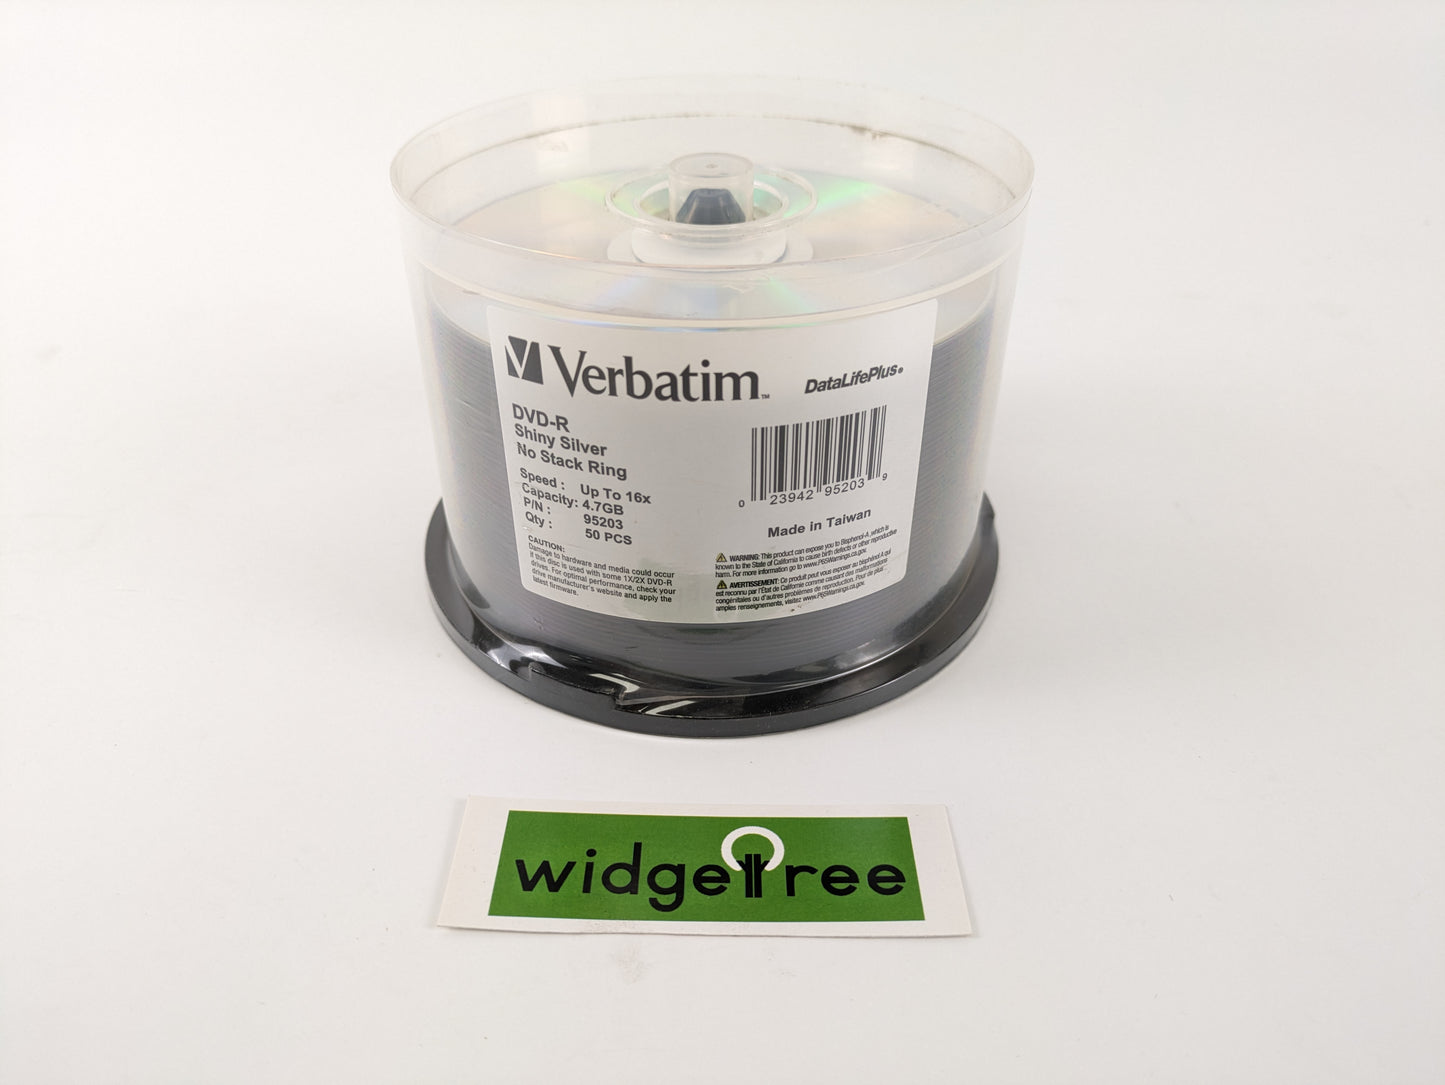 Verbatim DataLifePlus DVD-R 4.7GB 16X Blank DVDs 50pk - 95203 New